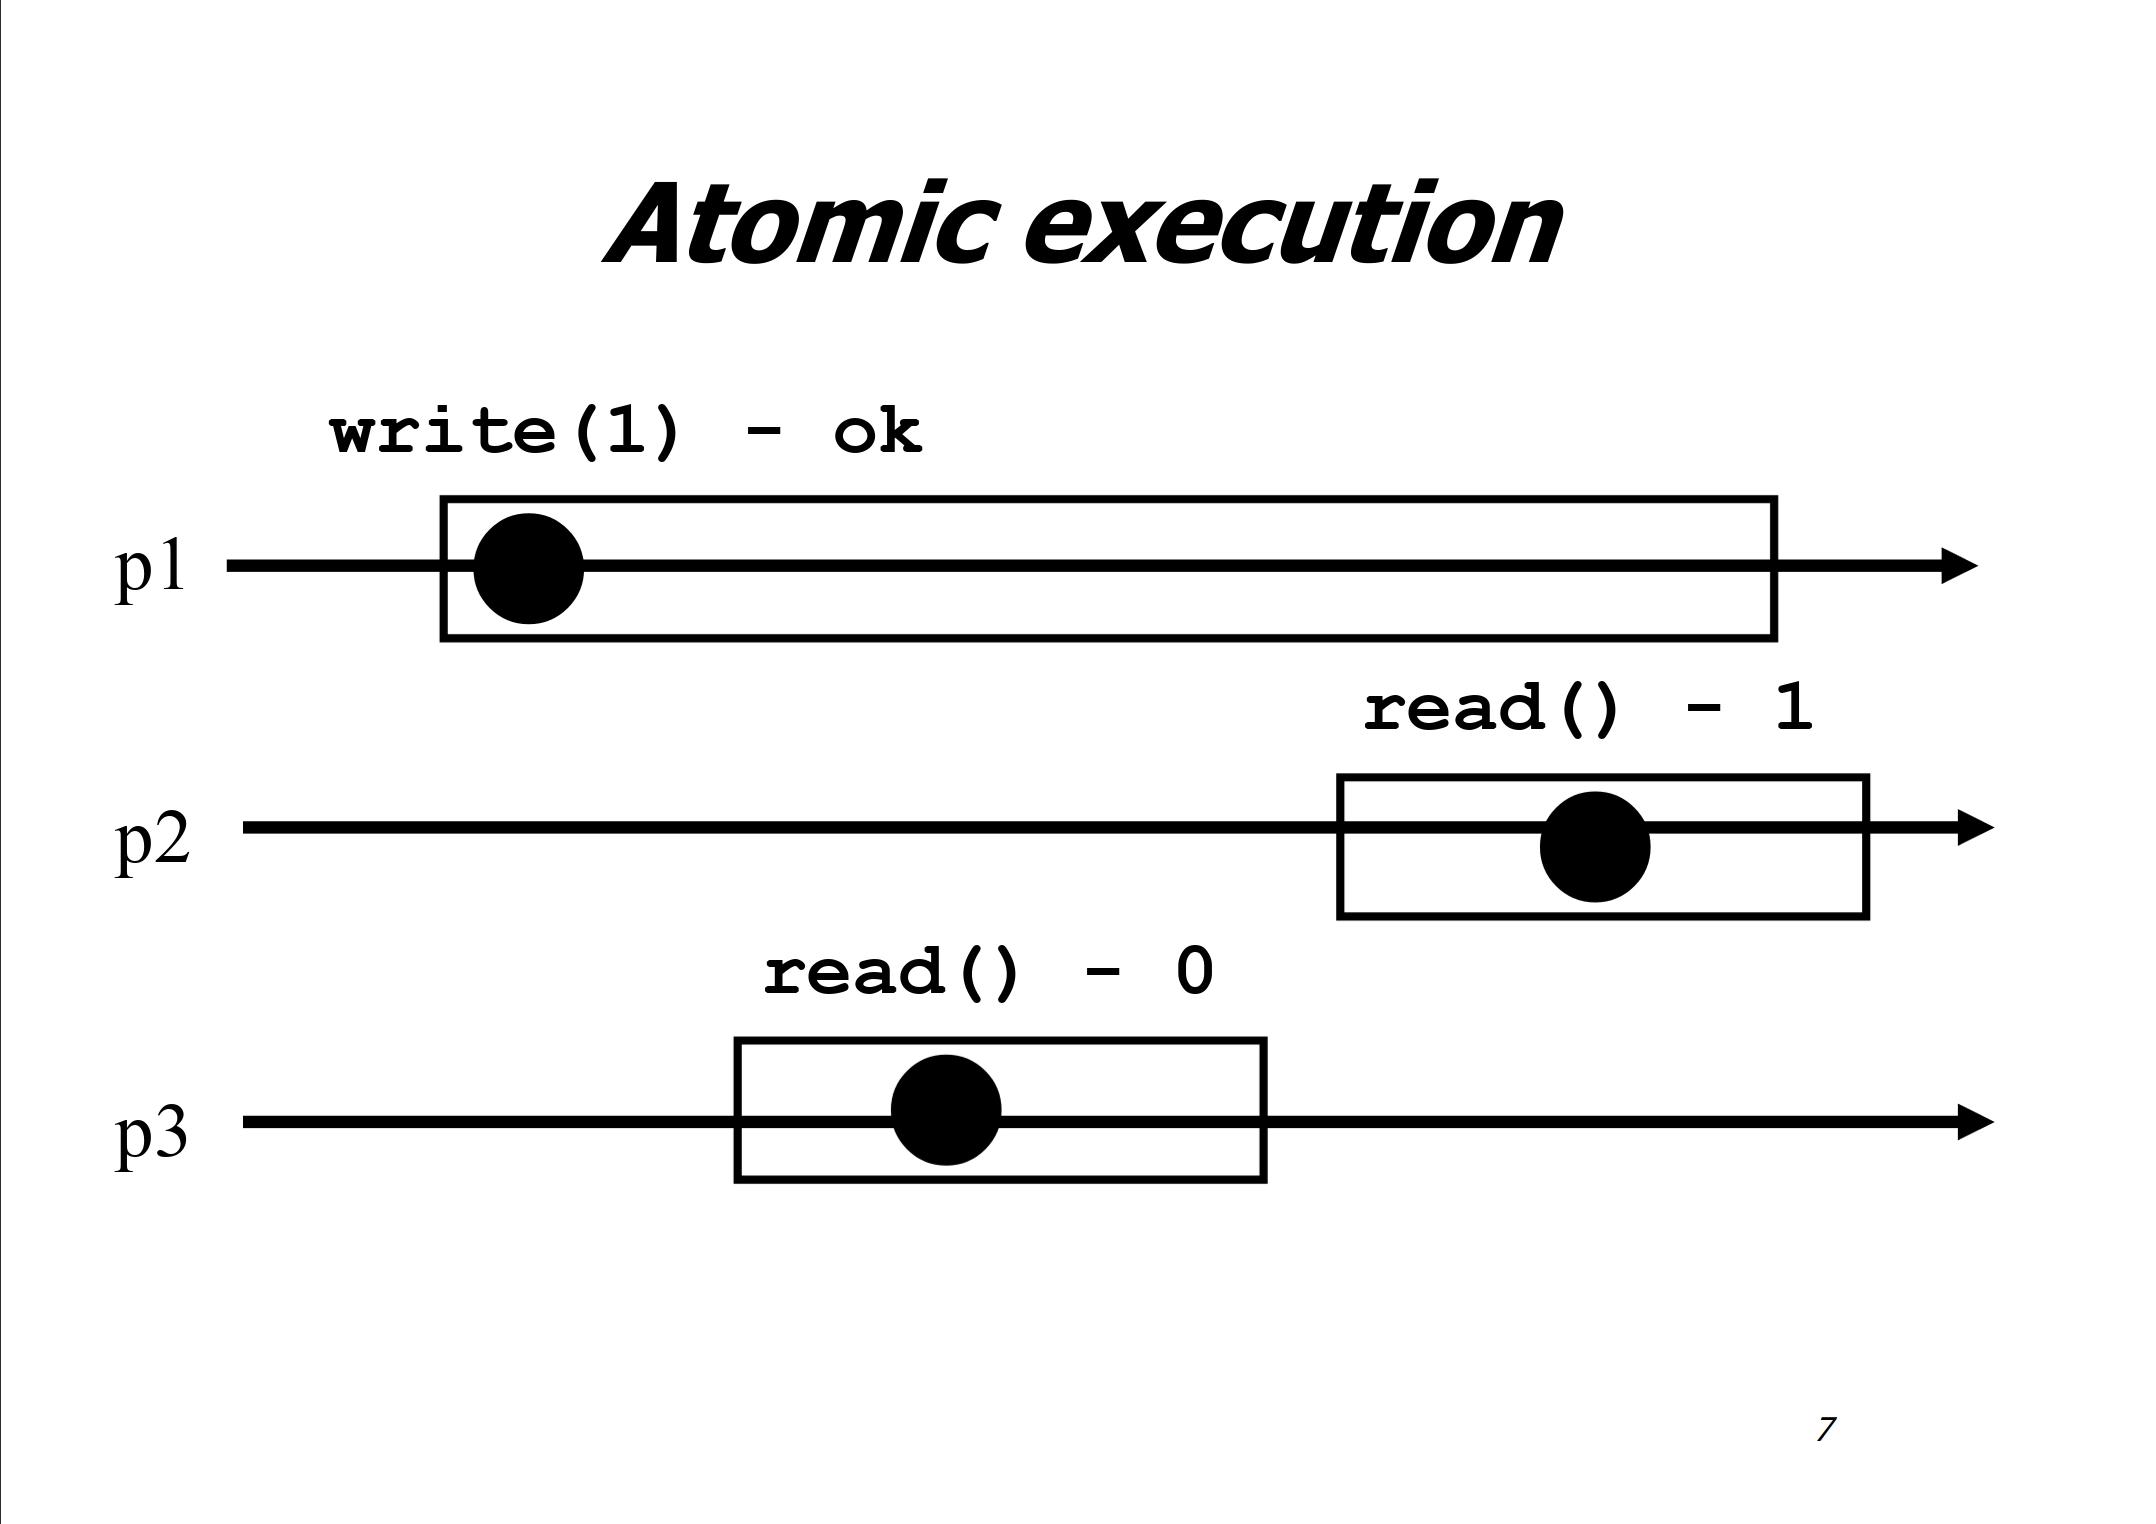 Atomic execution